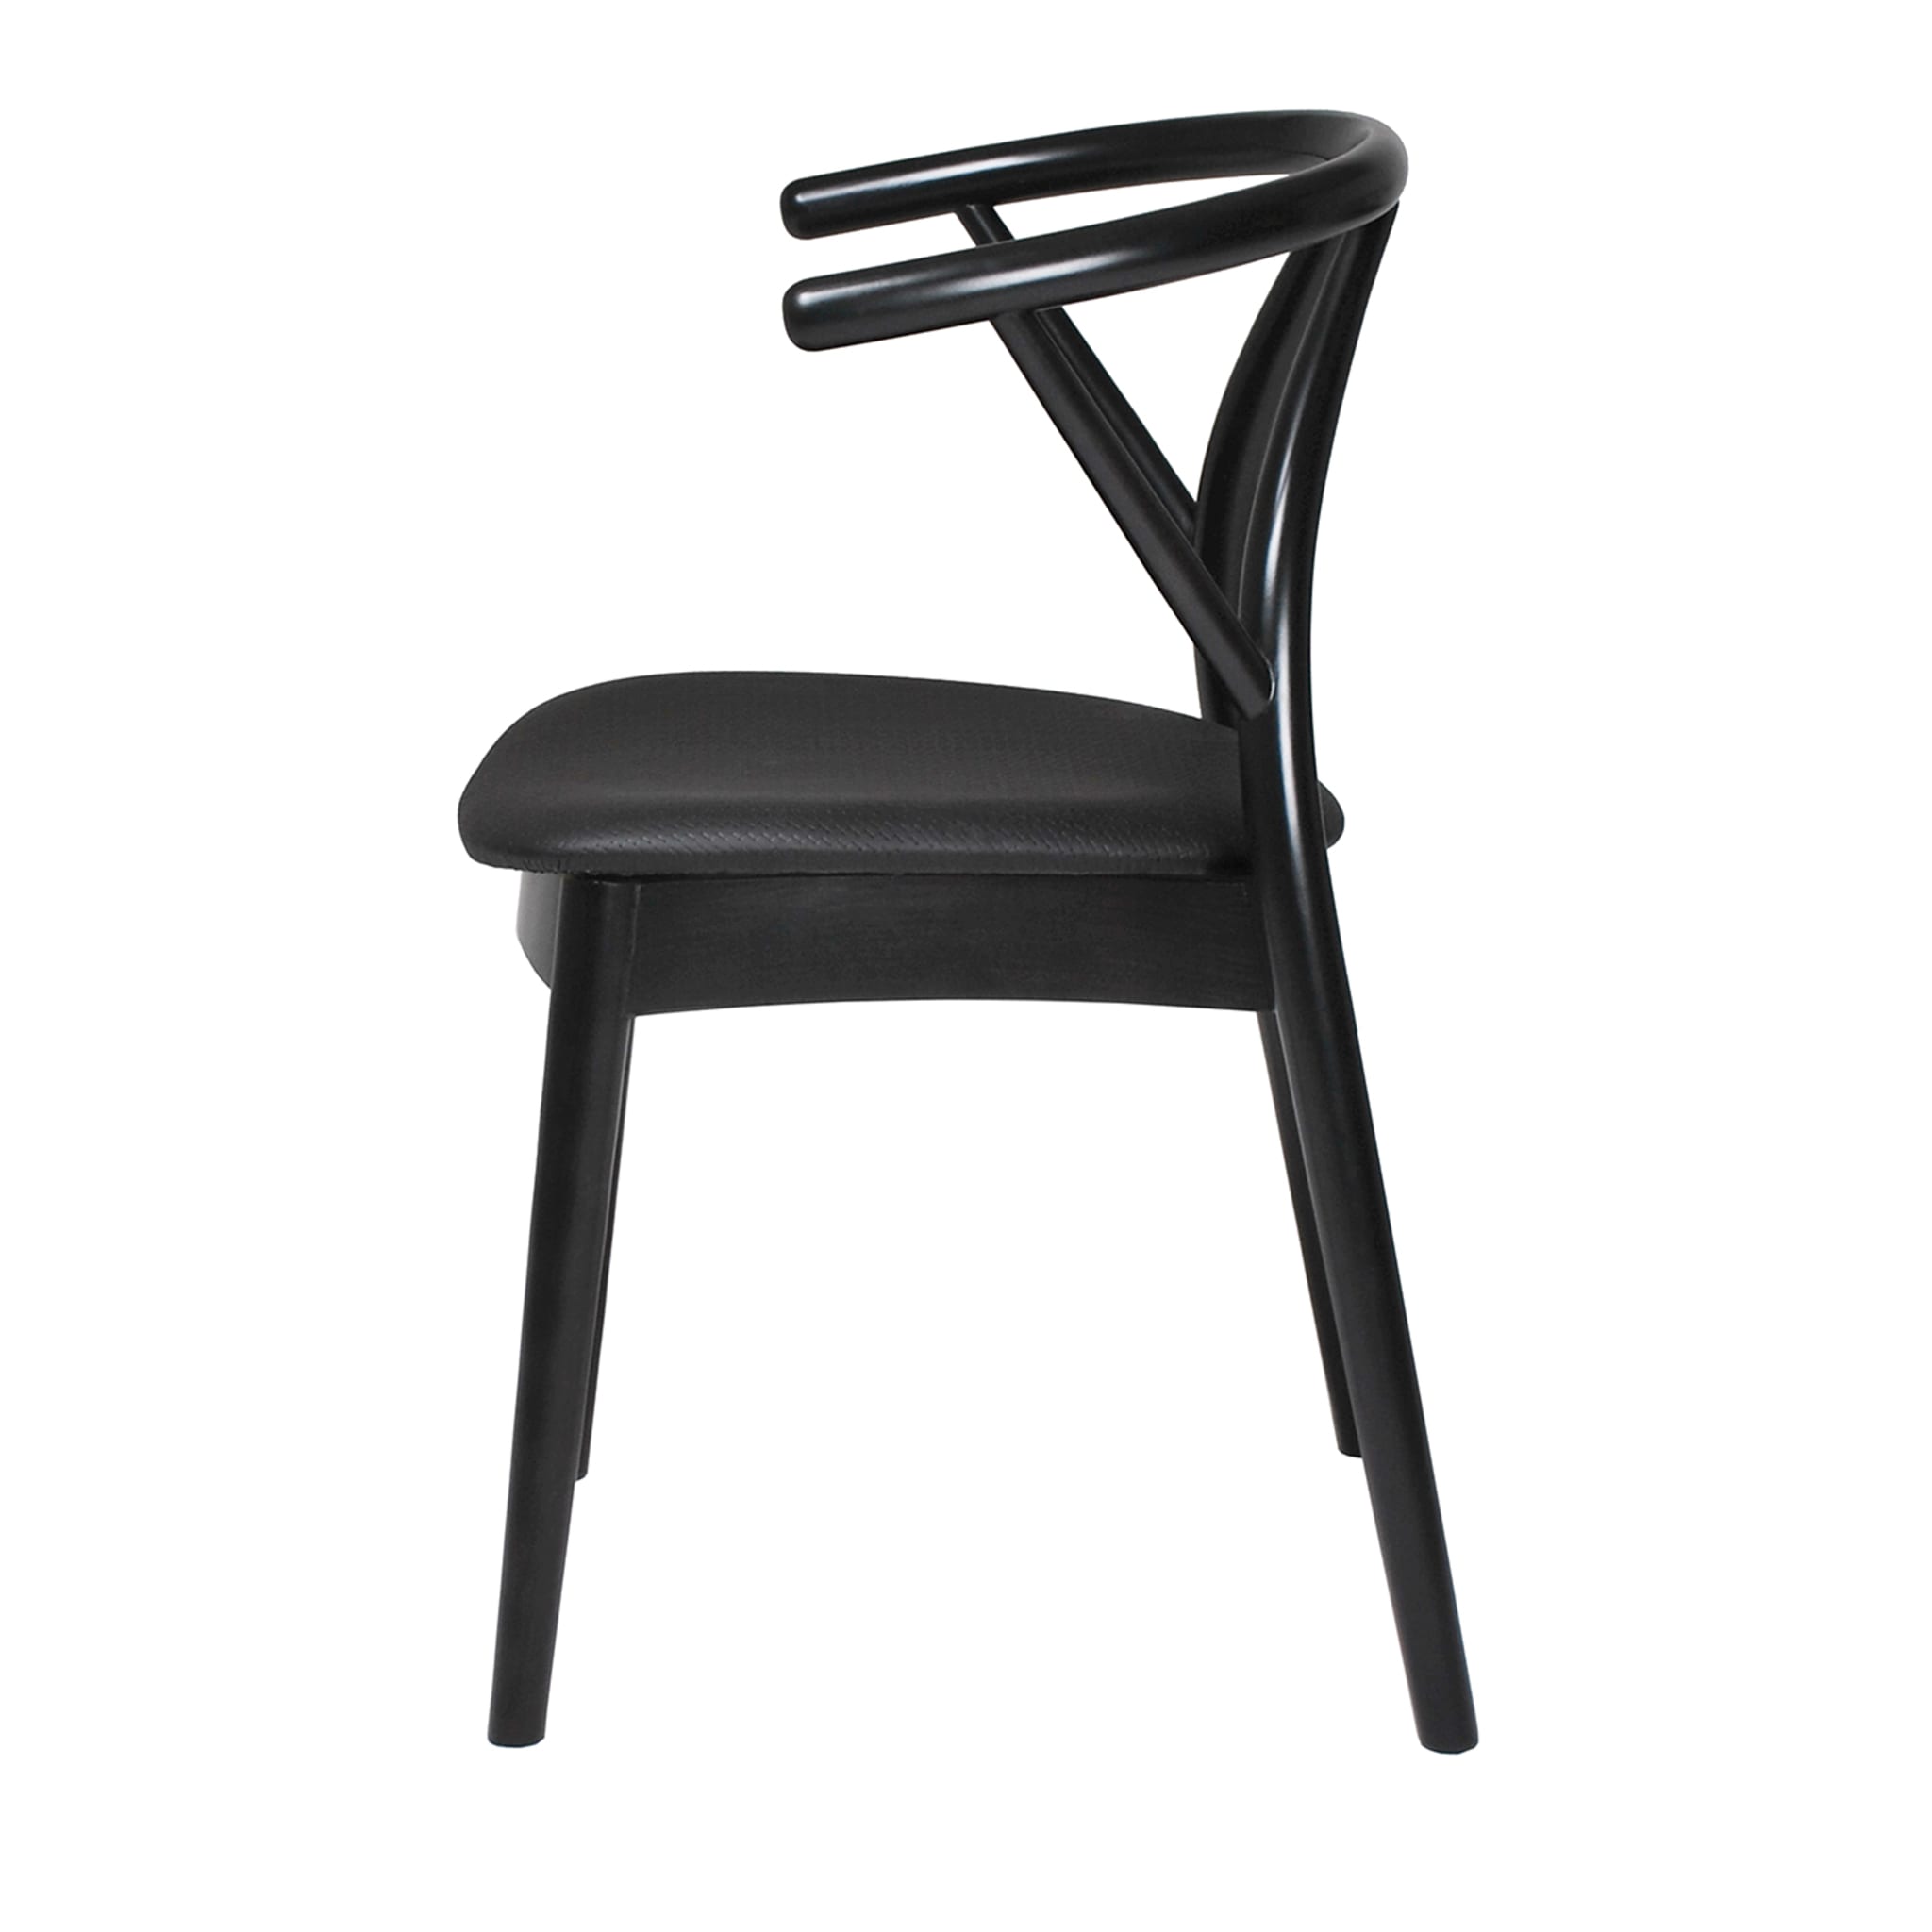 Yelly 970 Black Chair by Markus Johansson - Alternative view 2